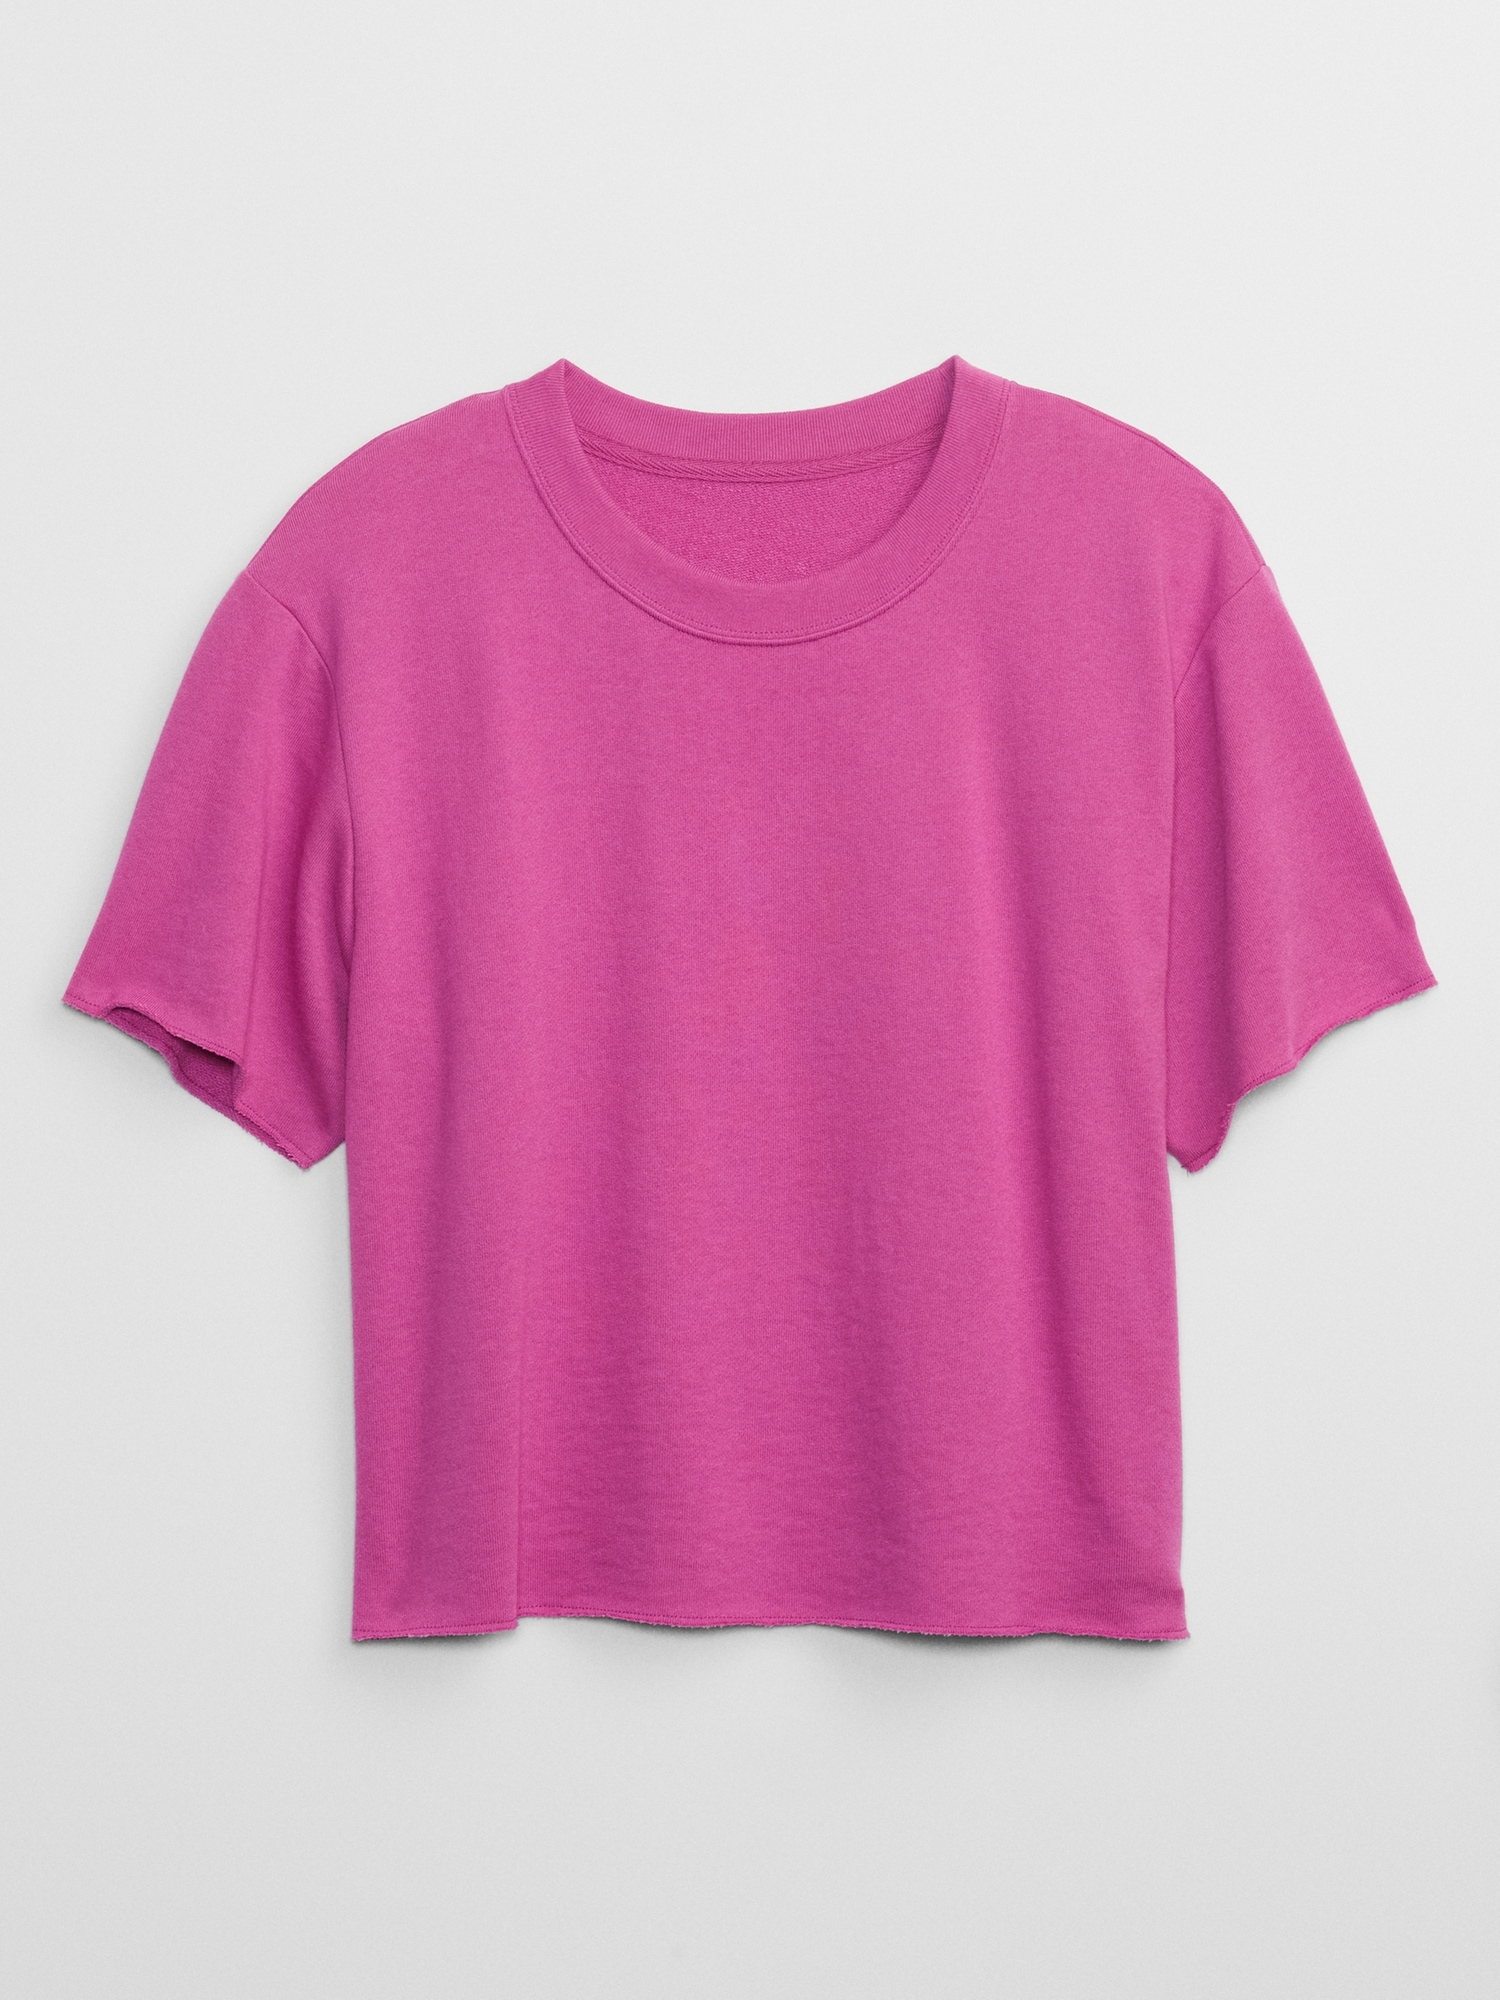 Elbow-Length Sleeve Sweatshirt | Gap Factory